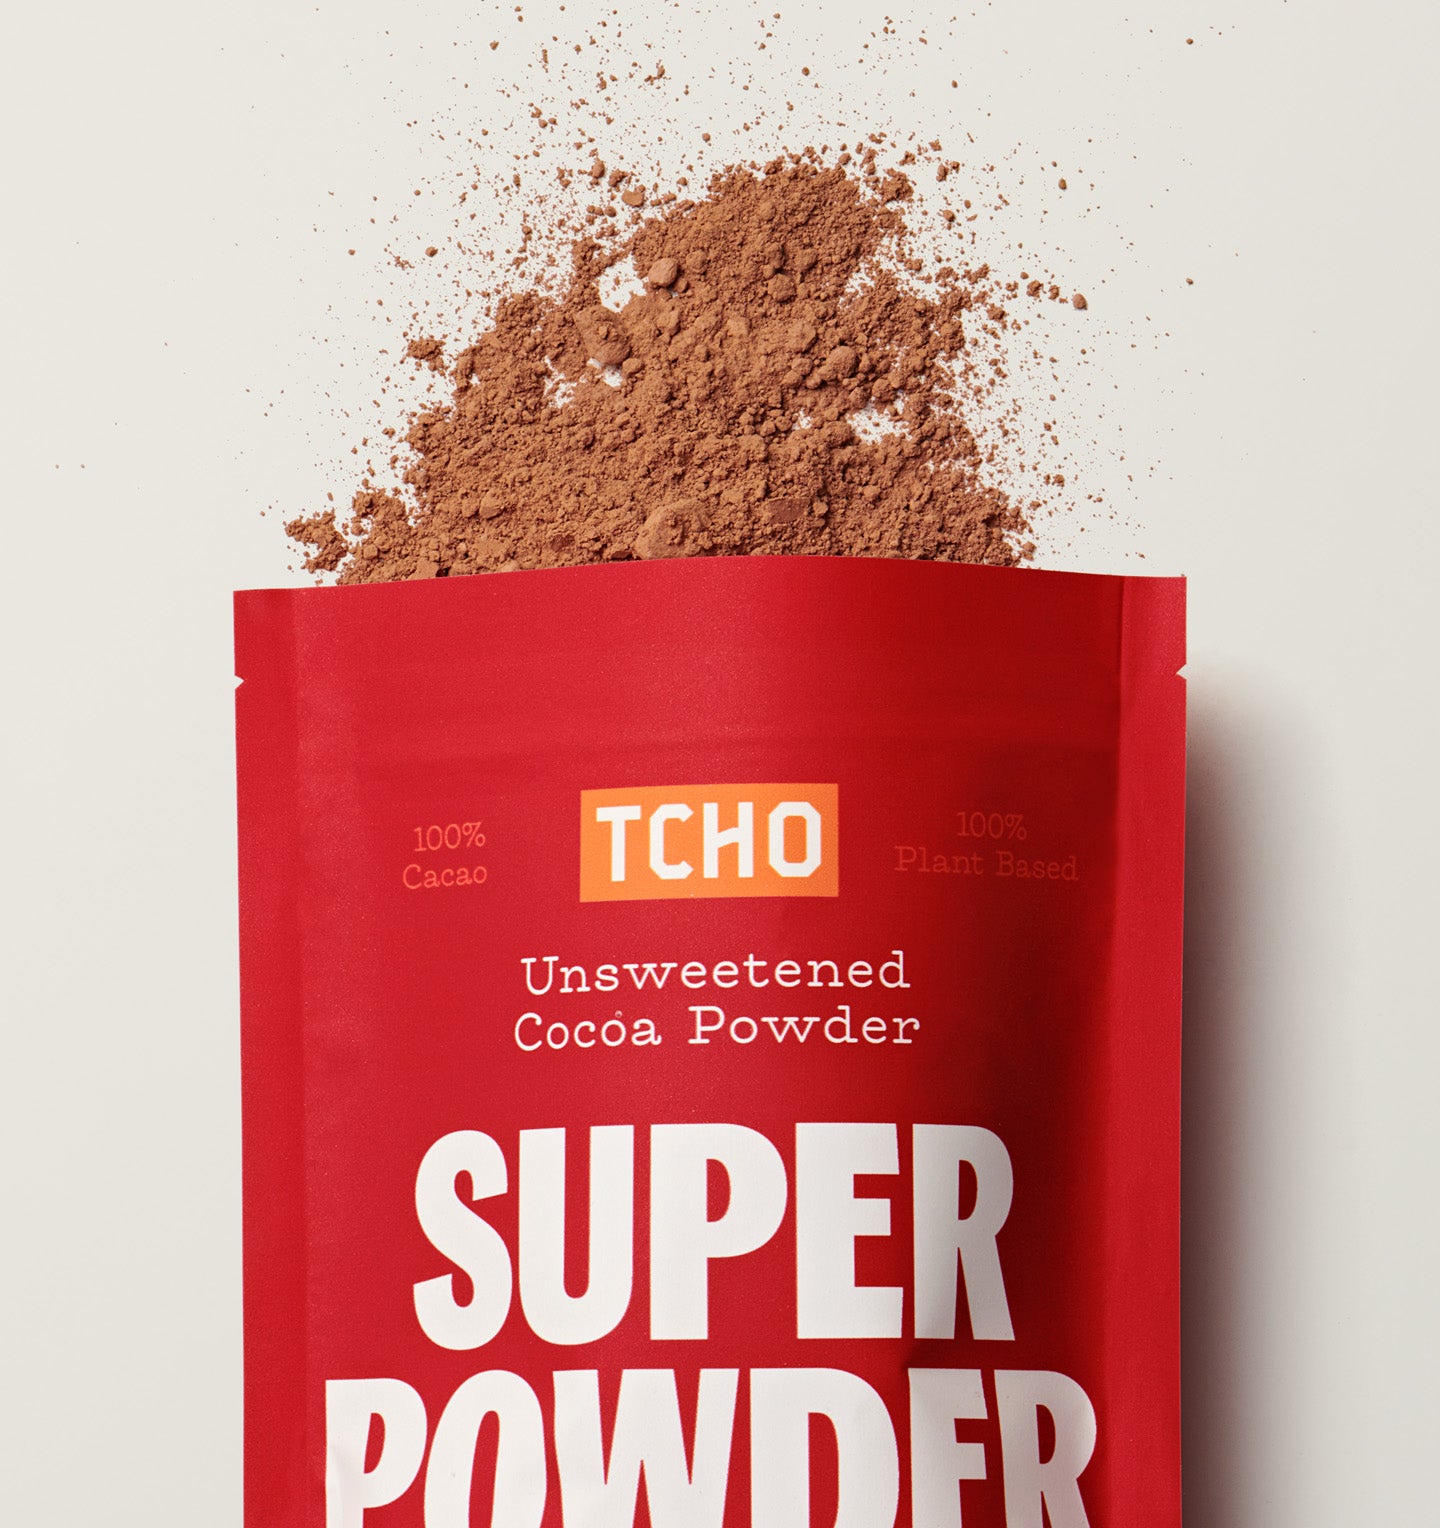 Jet Black Cocoa Powder – Ingredients Express